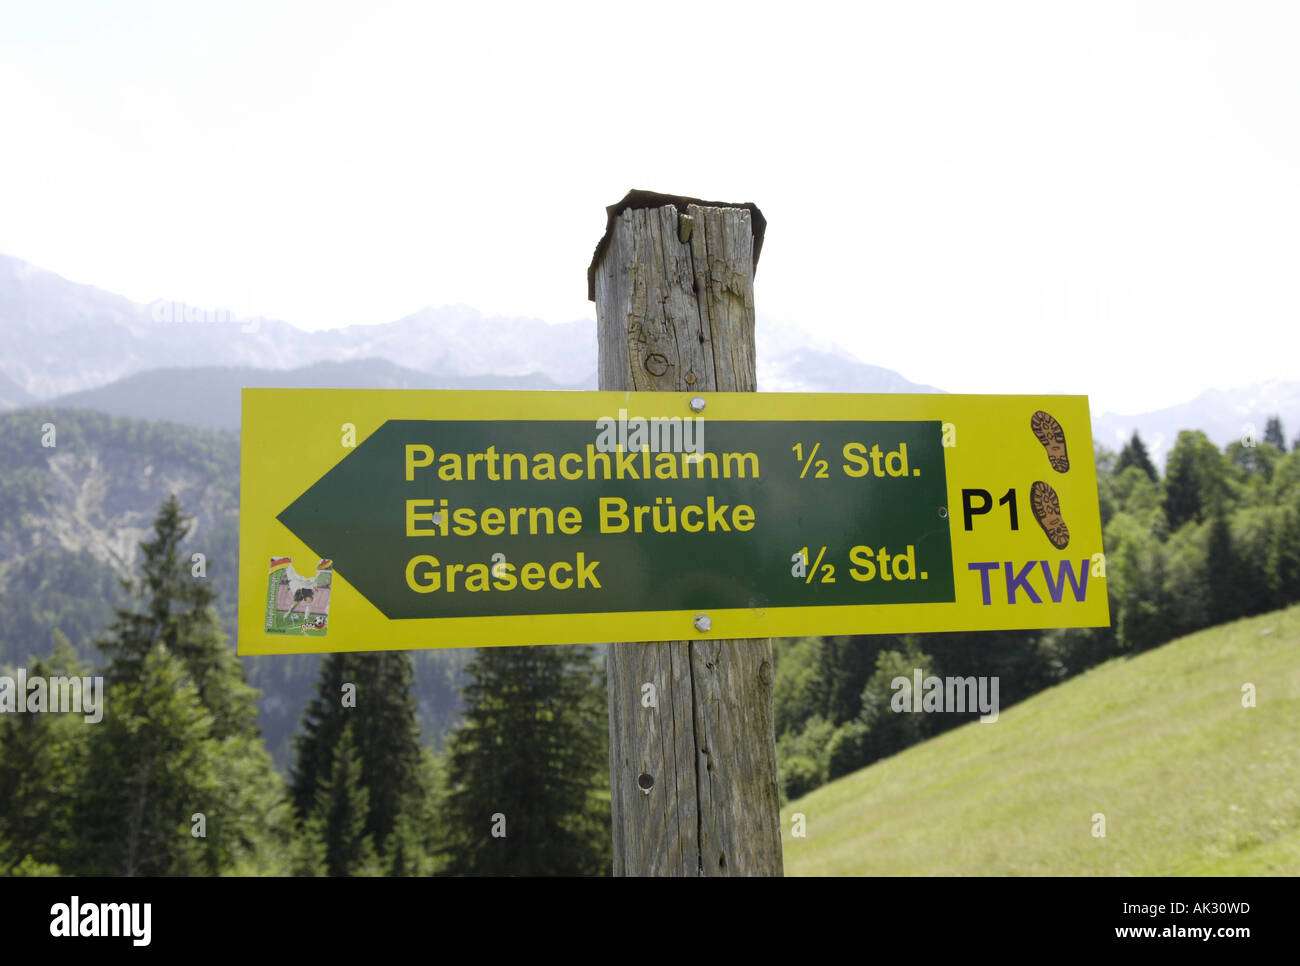 partnachklamm eiserne brucke graseck trail sign signpost green yellow nature natural rural coutnryside  alpine trail trek hike g Stock Photo